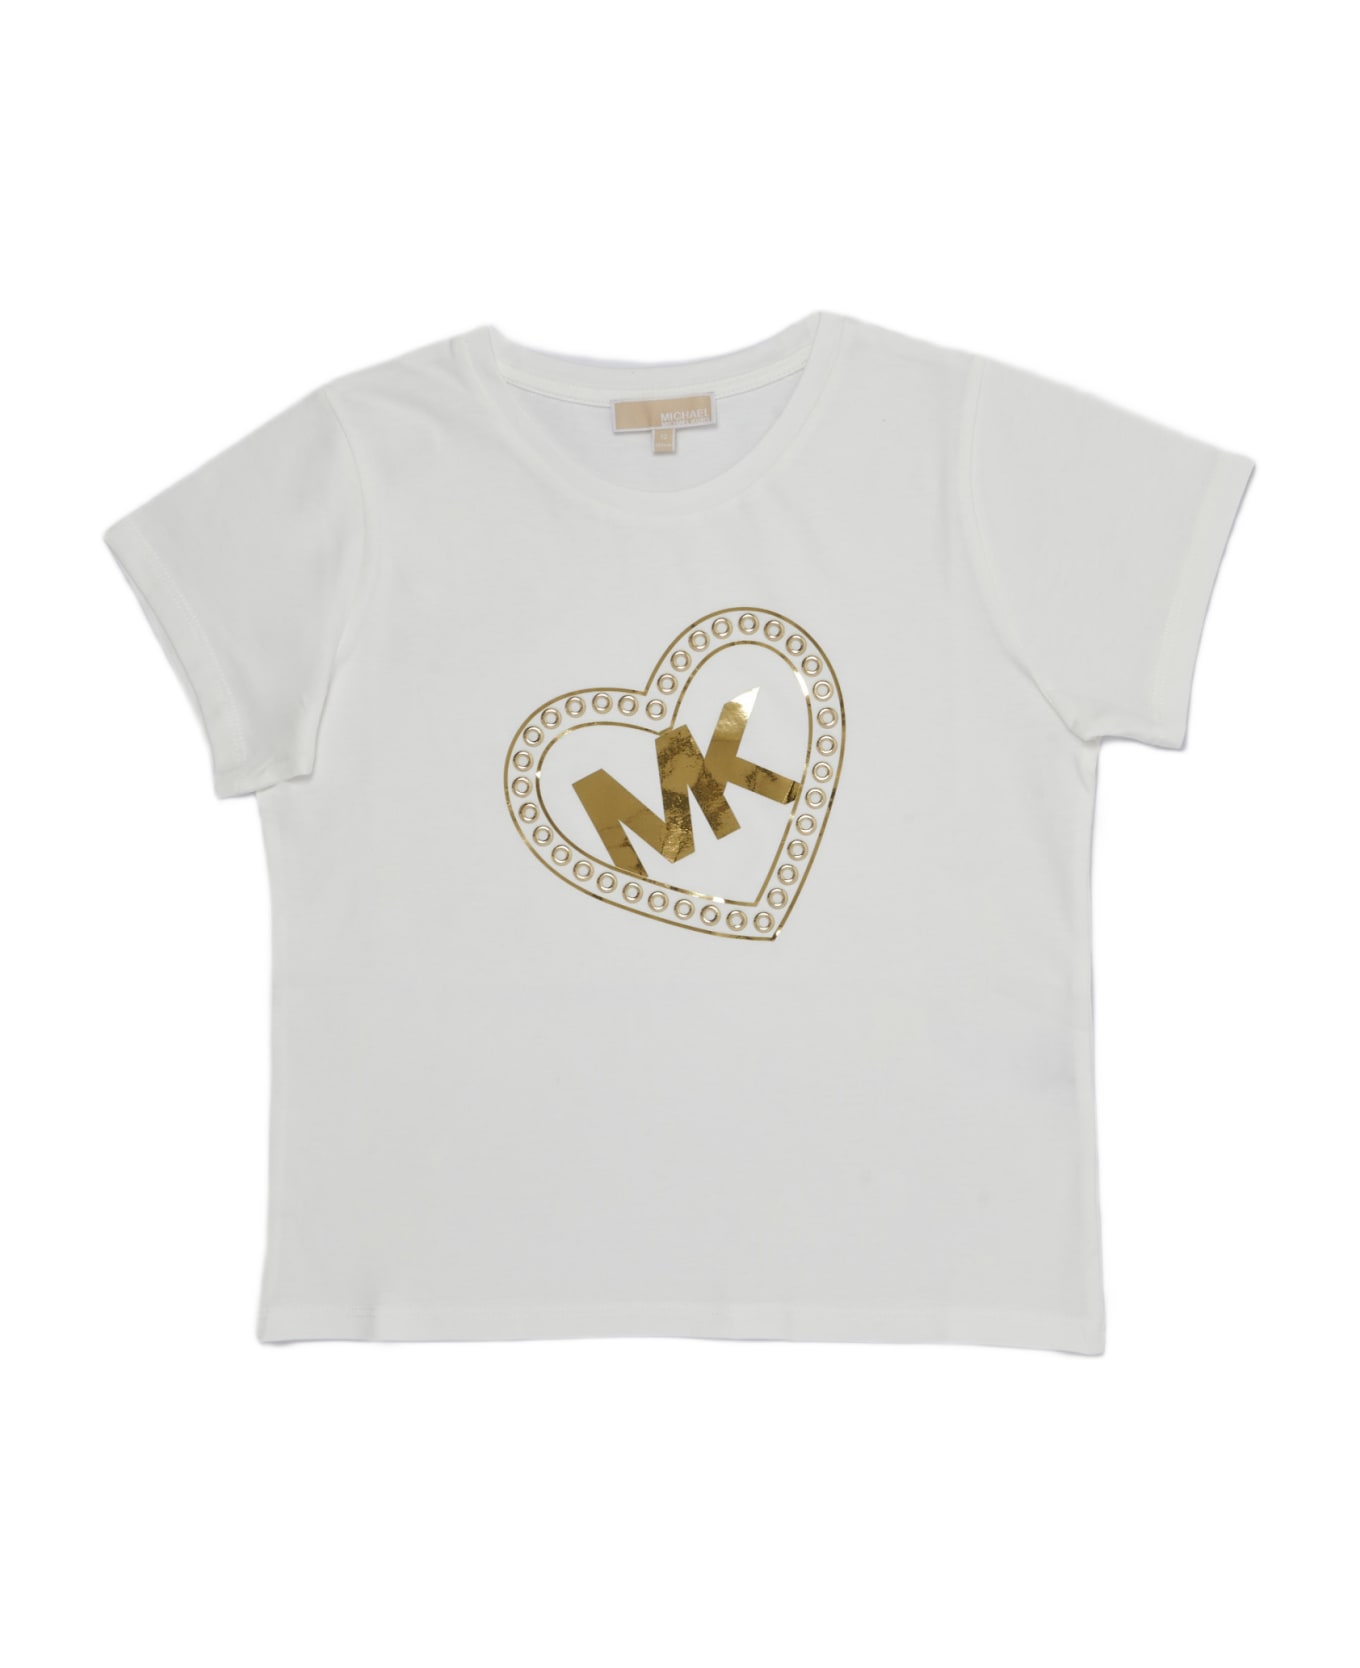 Michael Kors T-shirt T-shirt - AVORIO